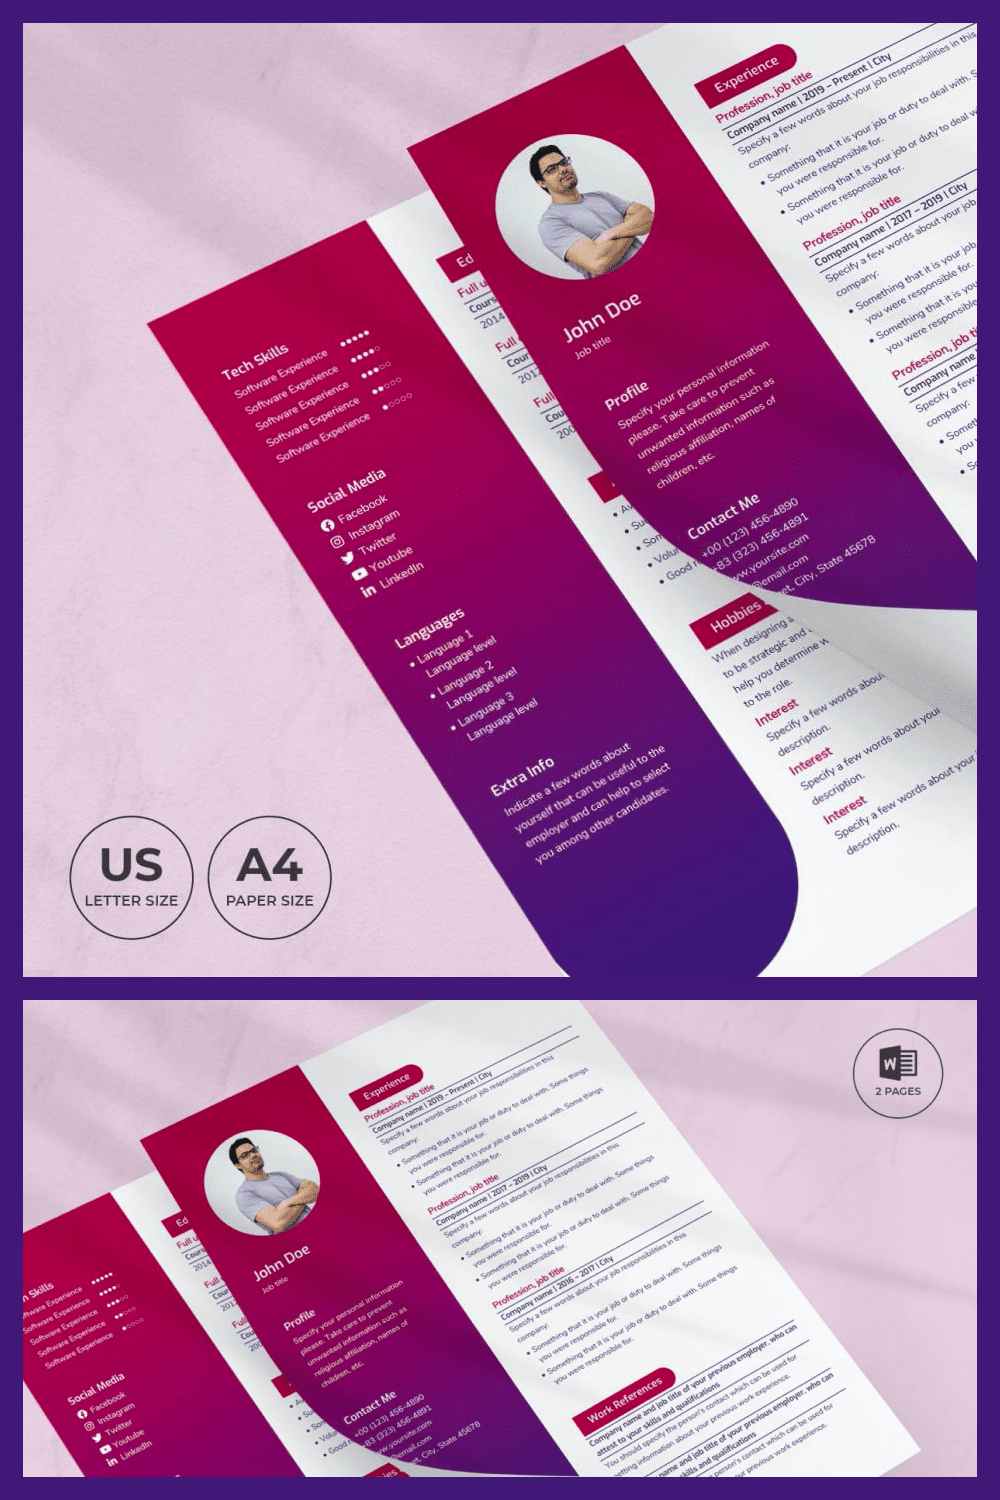 Advertising Agency CV Resume Template - MasterBundles - Pinterest Collage Image.